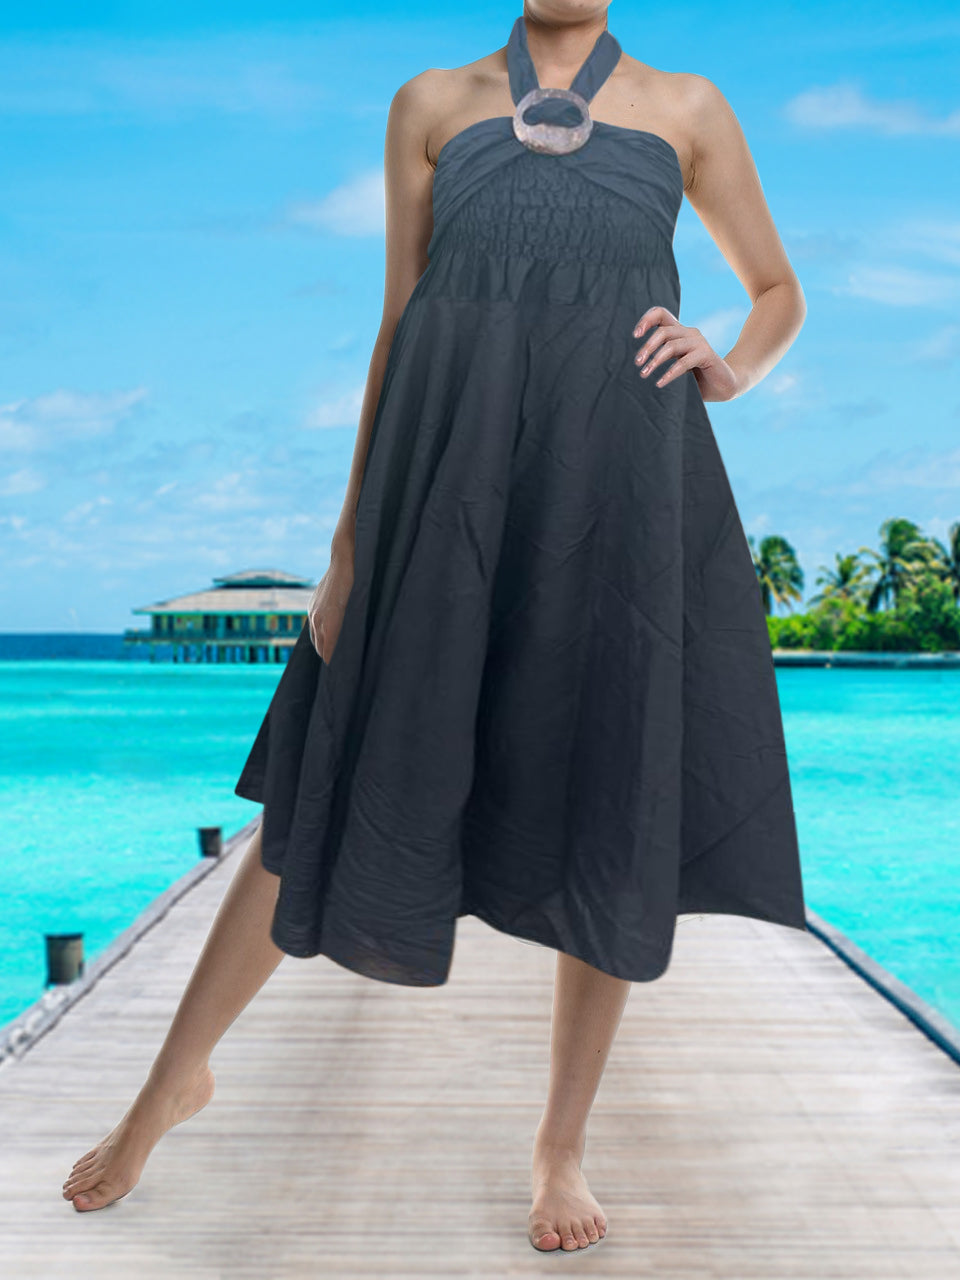 Bohotusk Plain Black Beach Dress (& Long Skirt With Coconut Buckle) S/M to 3XL